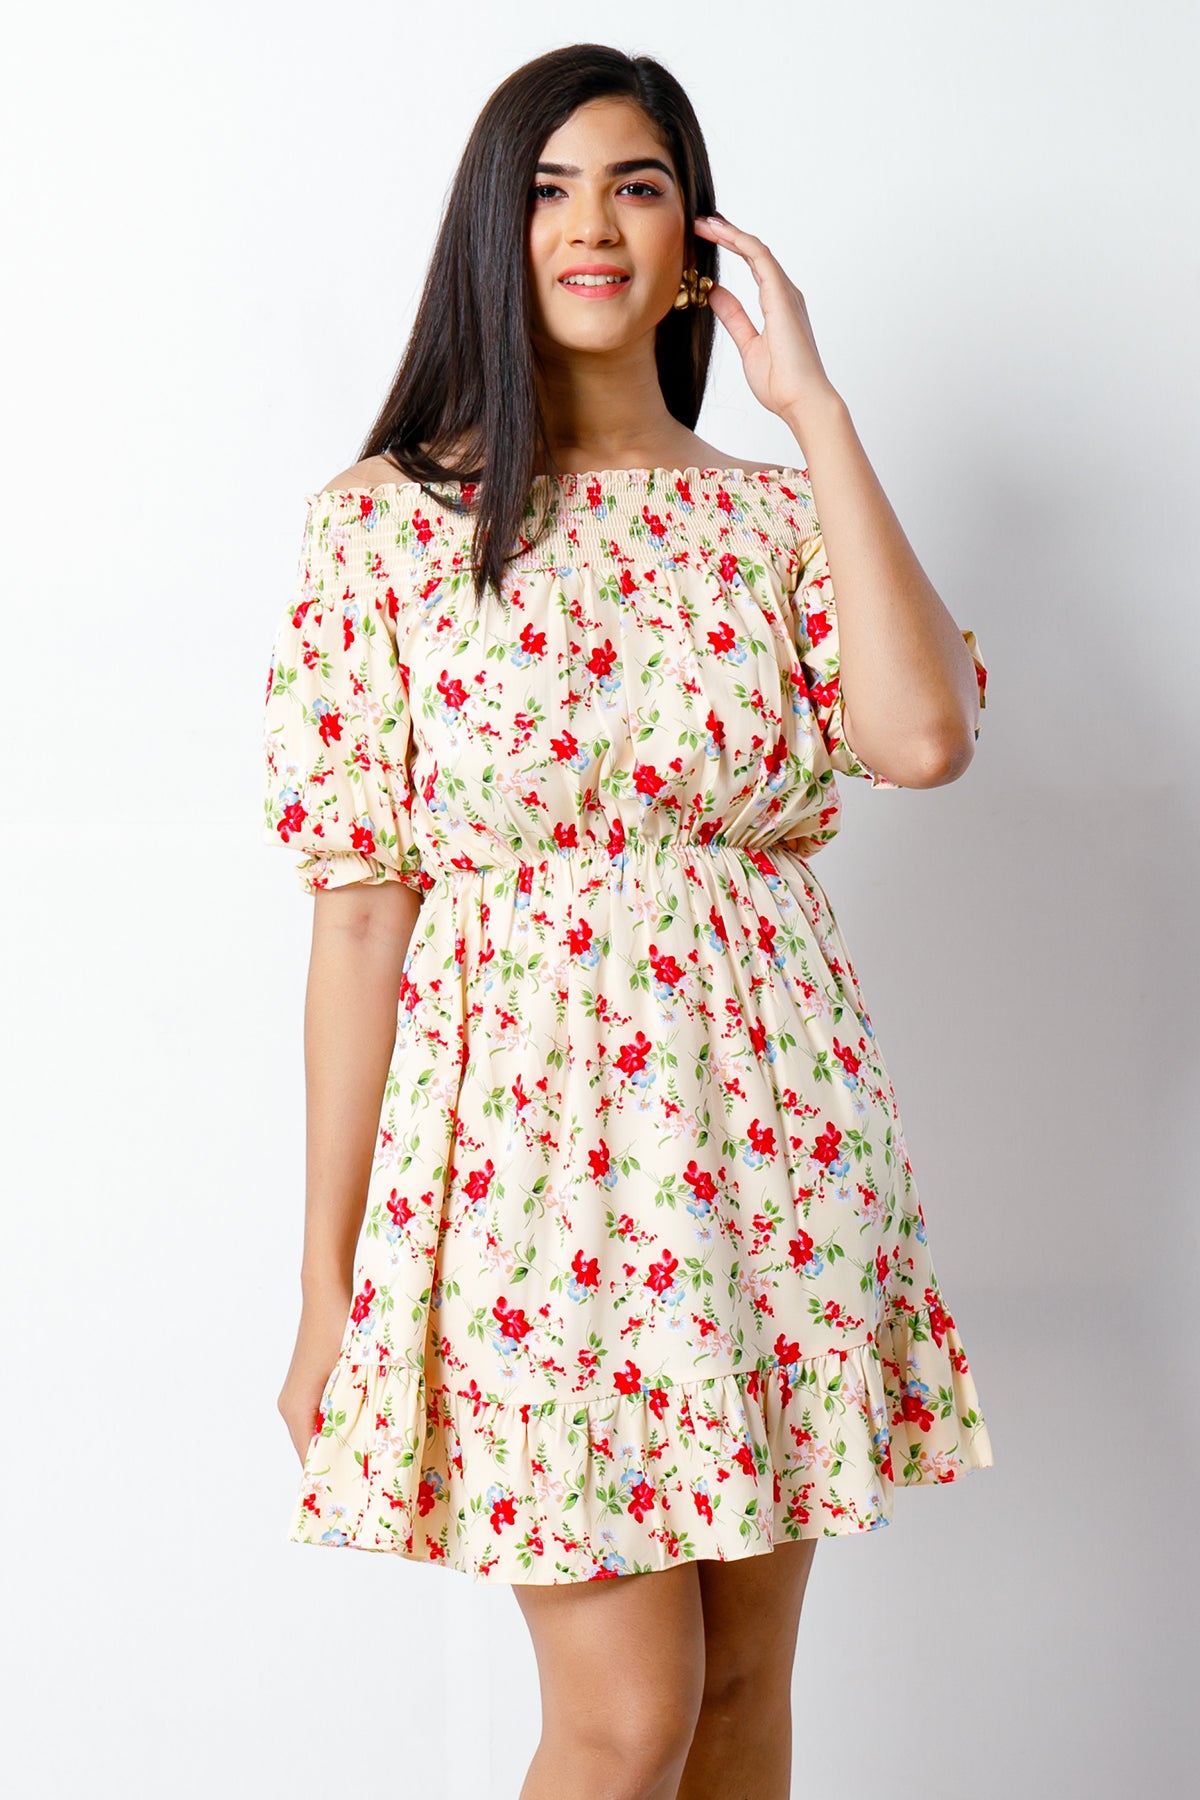 Modano Womens Puff Sleeve Casual Floral Dress (7890297258208)